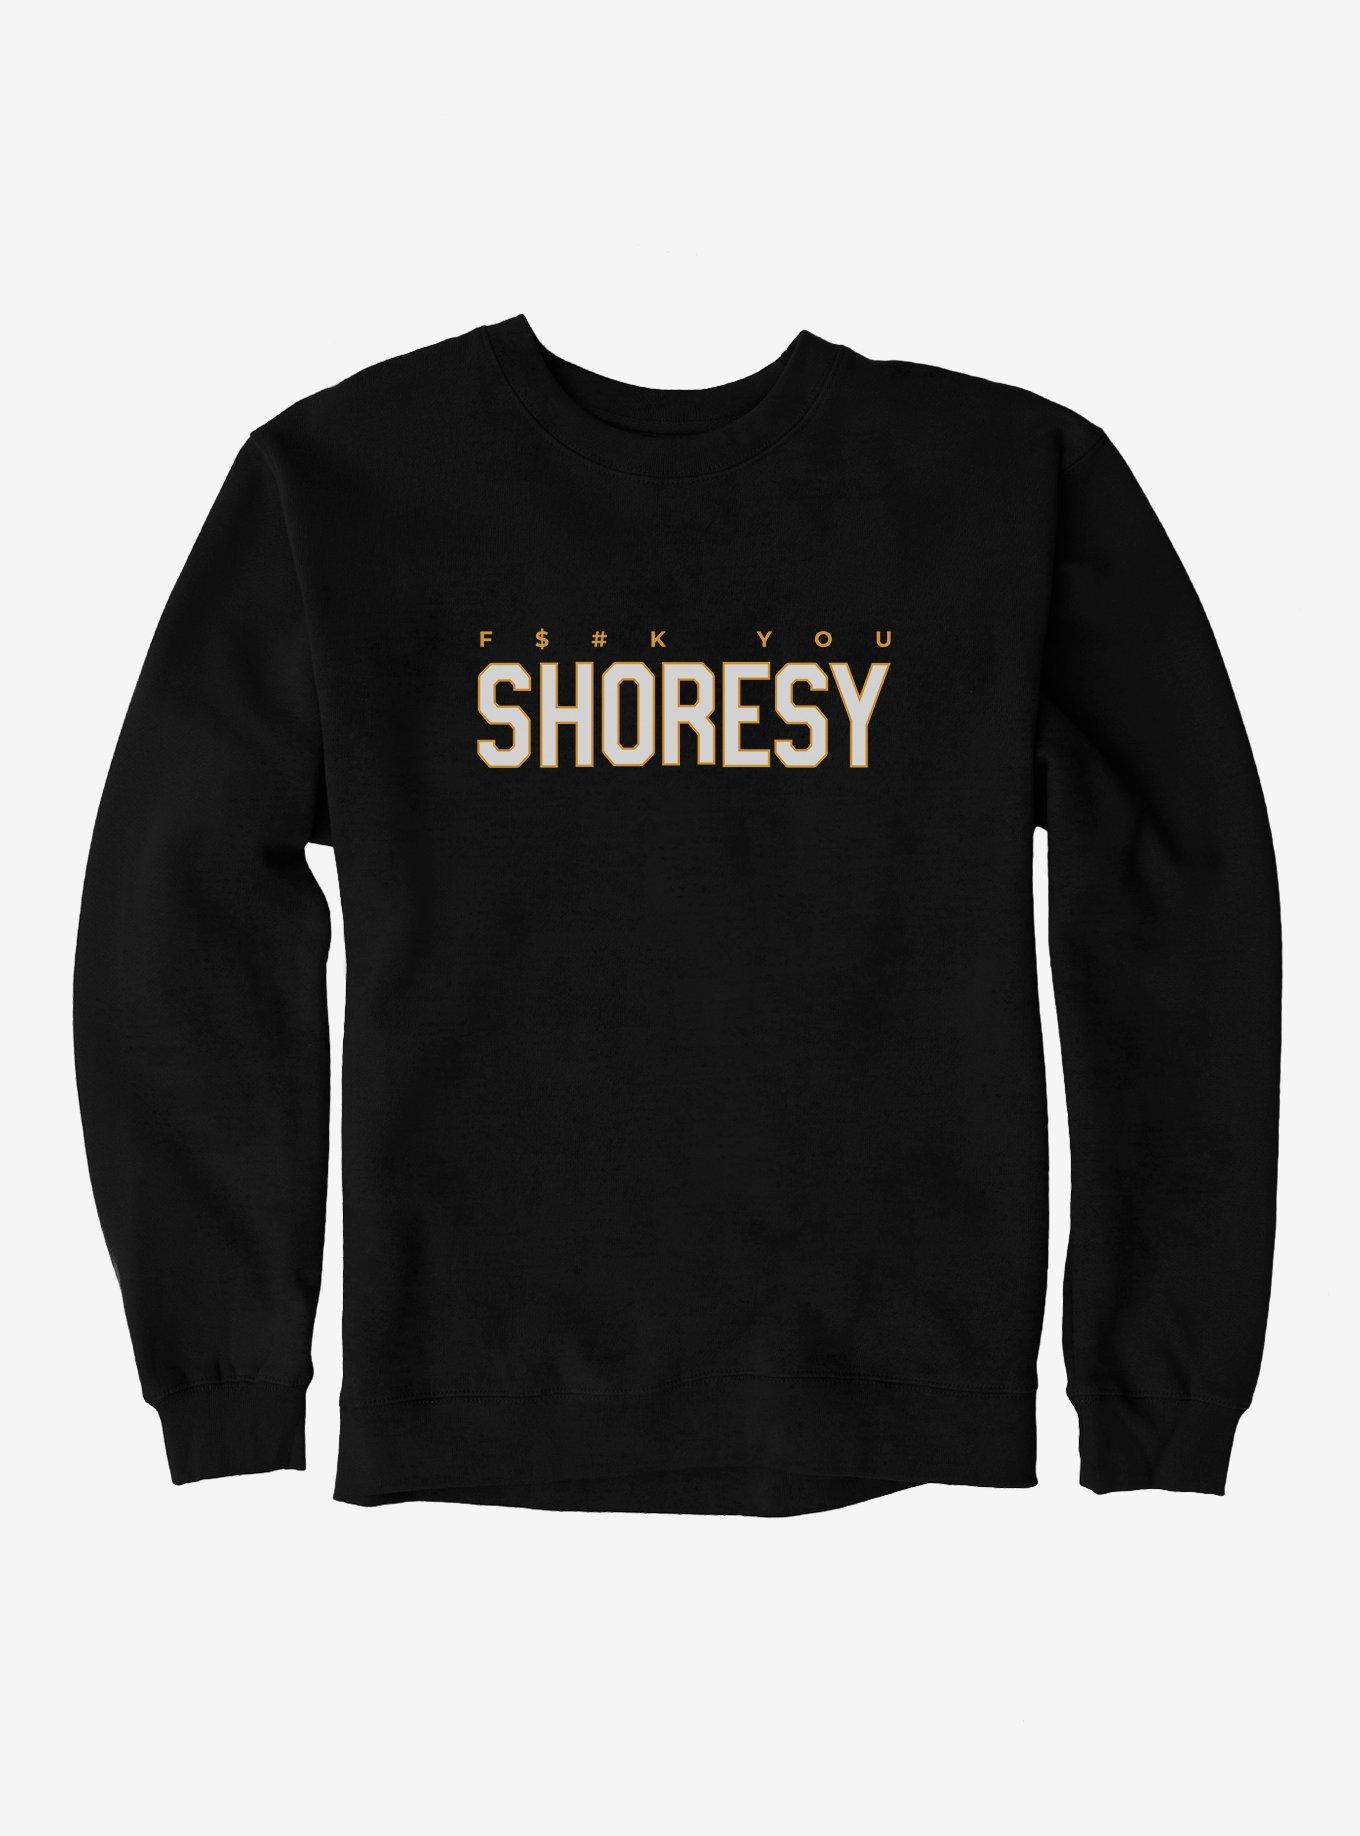 Shoresy F You Shoresy Sweatshirt, BLACK, hi-res